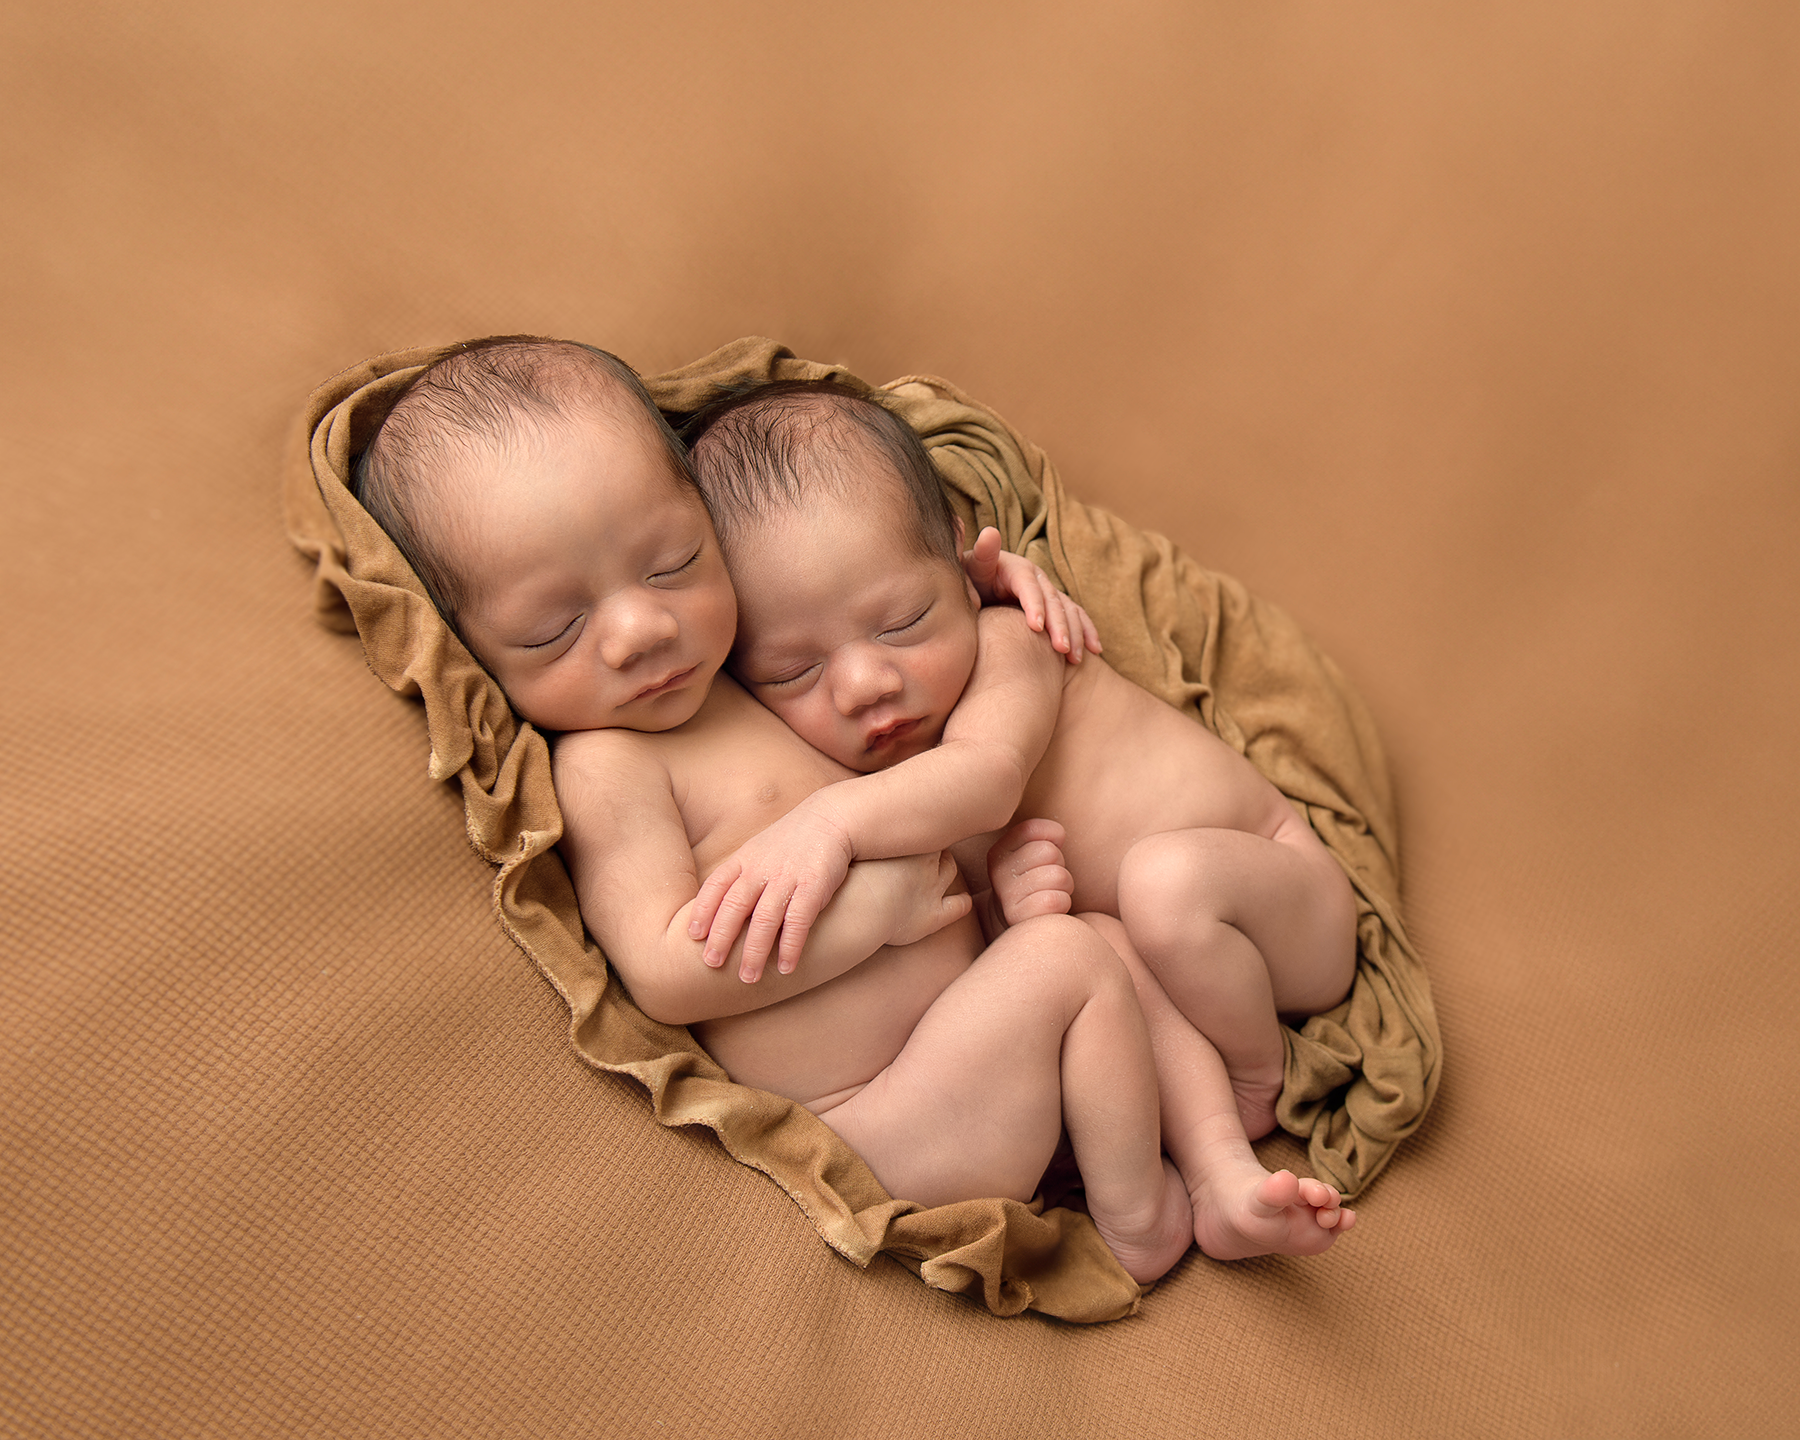 Newborn twin boys sleeping together